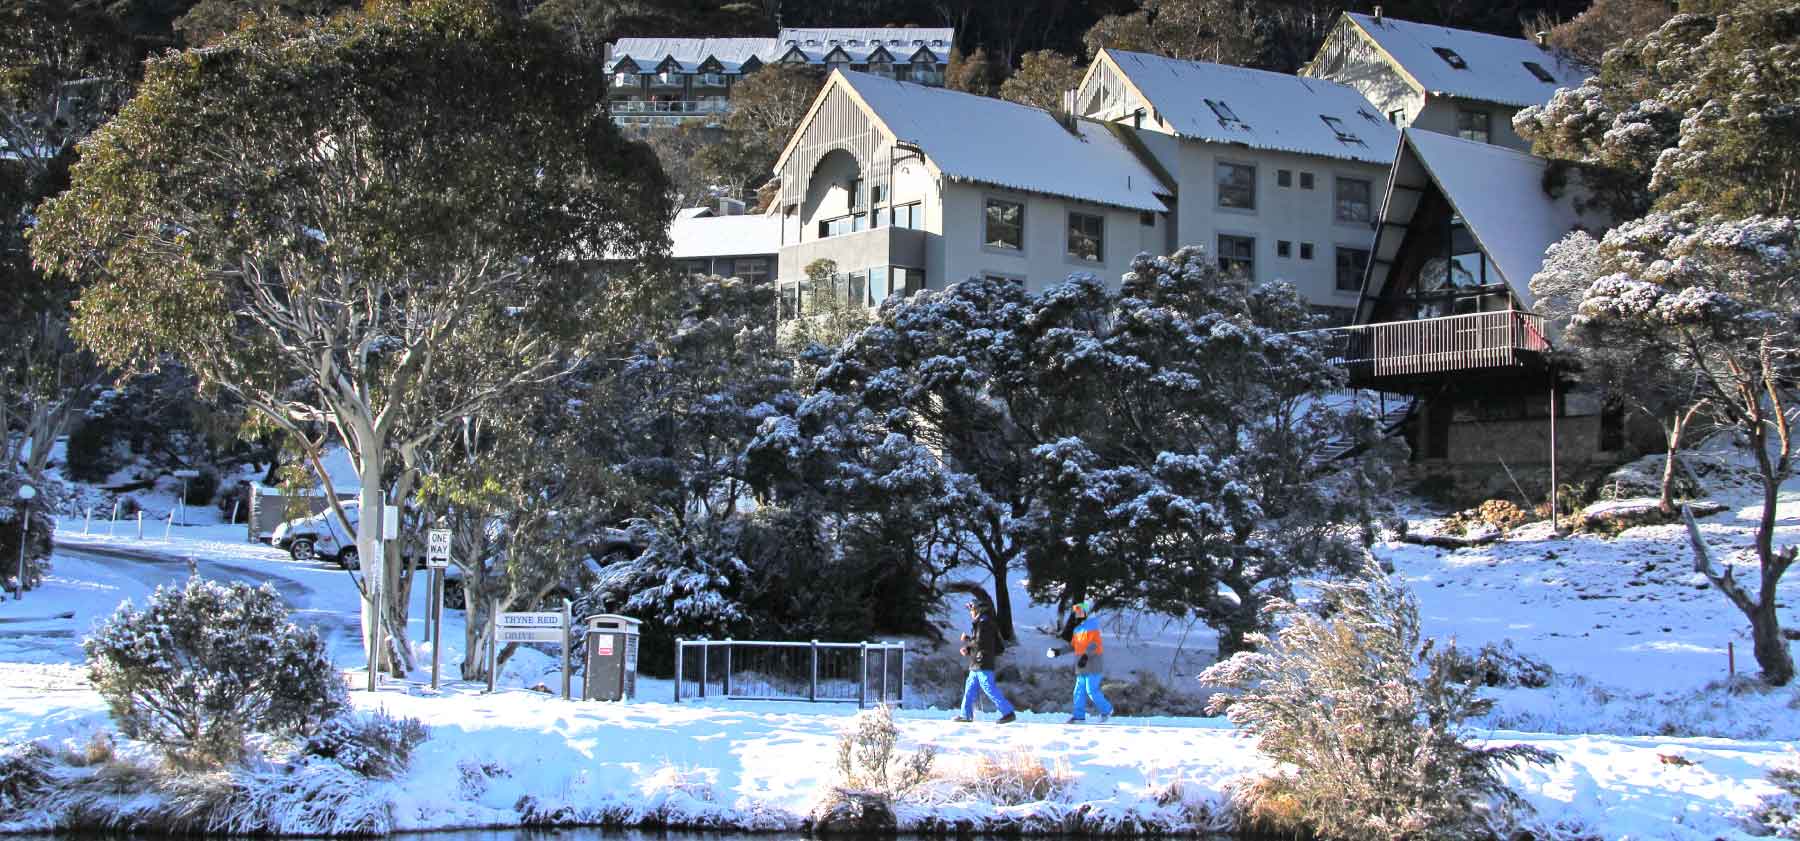 COVID-Safe Practices at Boali Lodge – Winter 2020, Boali Lodge